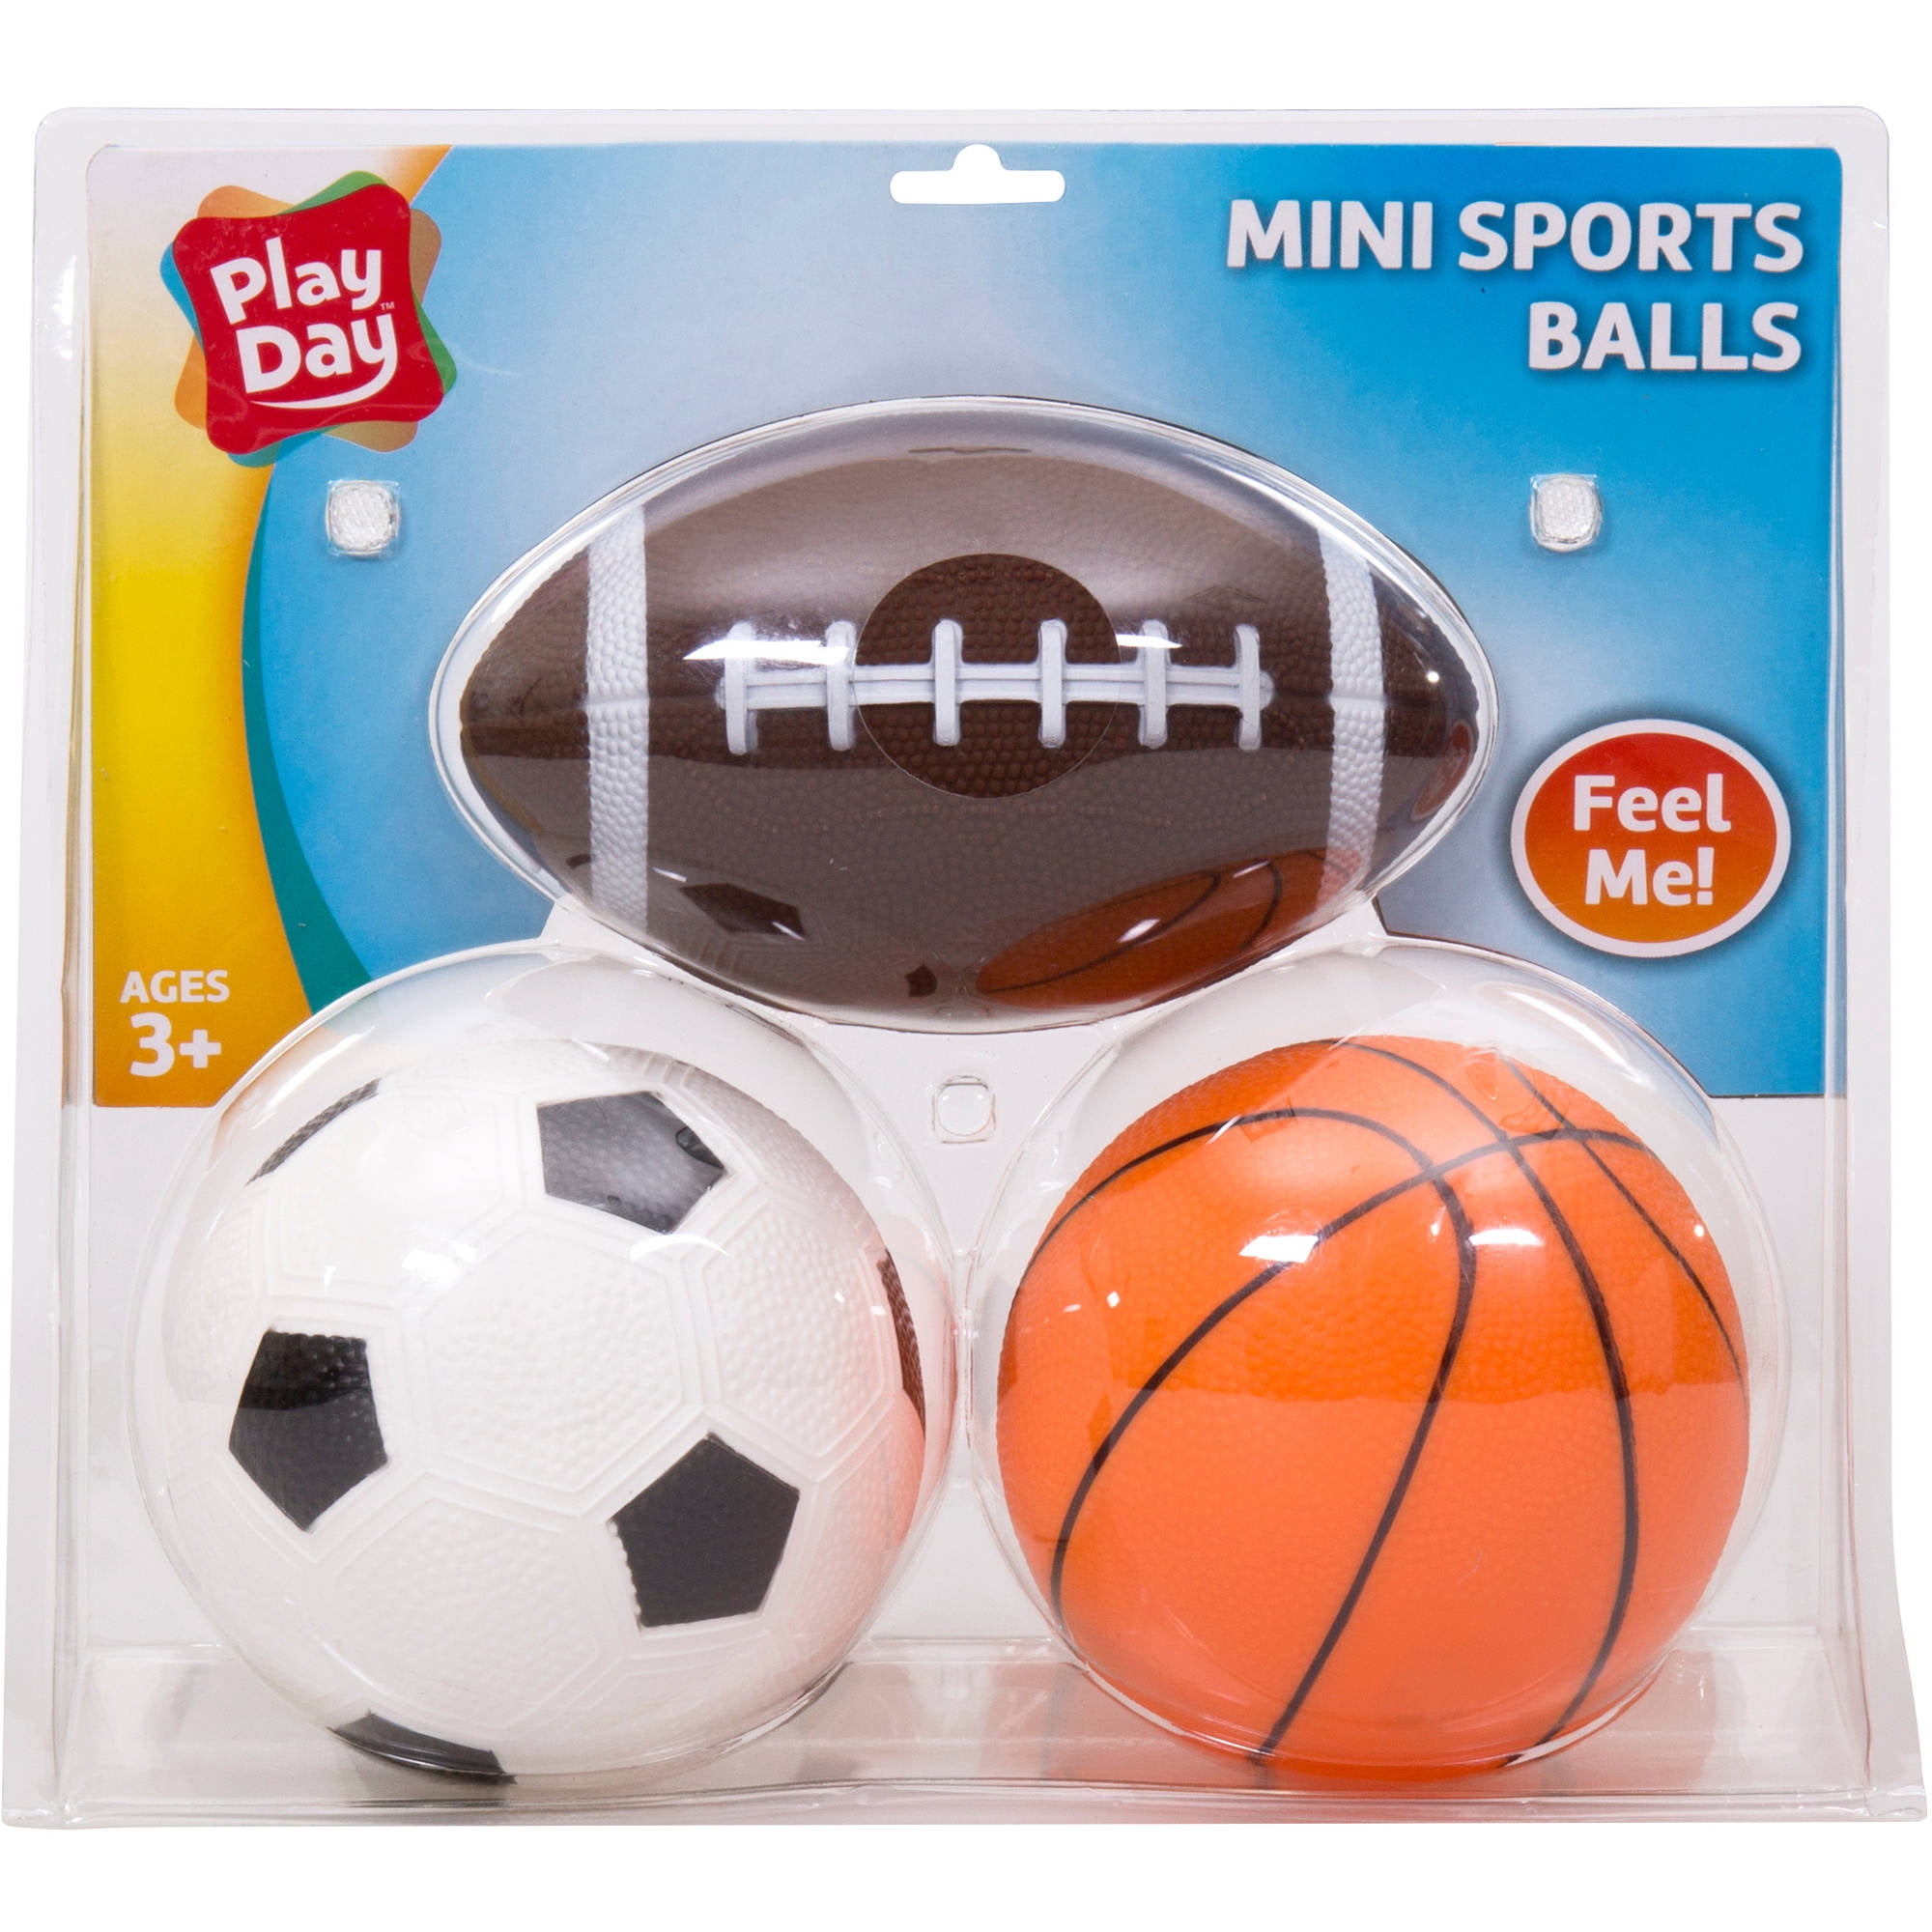 KE_ Schylling Blow Toys Hobbies Outdoor Fun Sports Foam Floating Toy Ball Game 